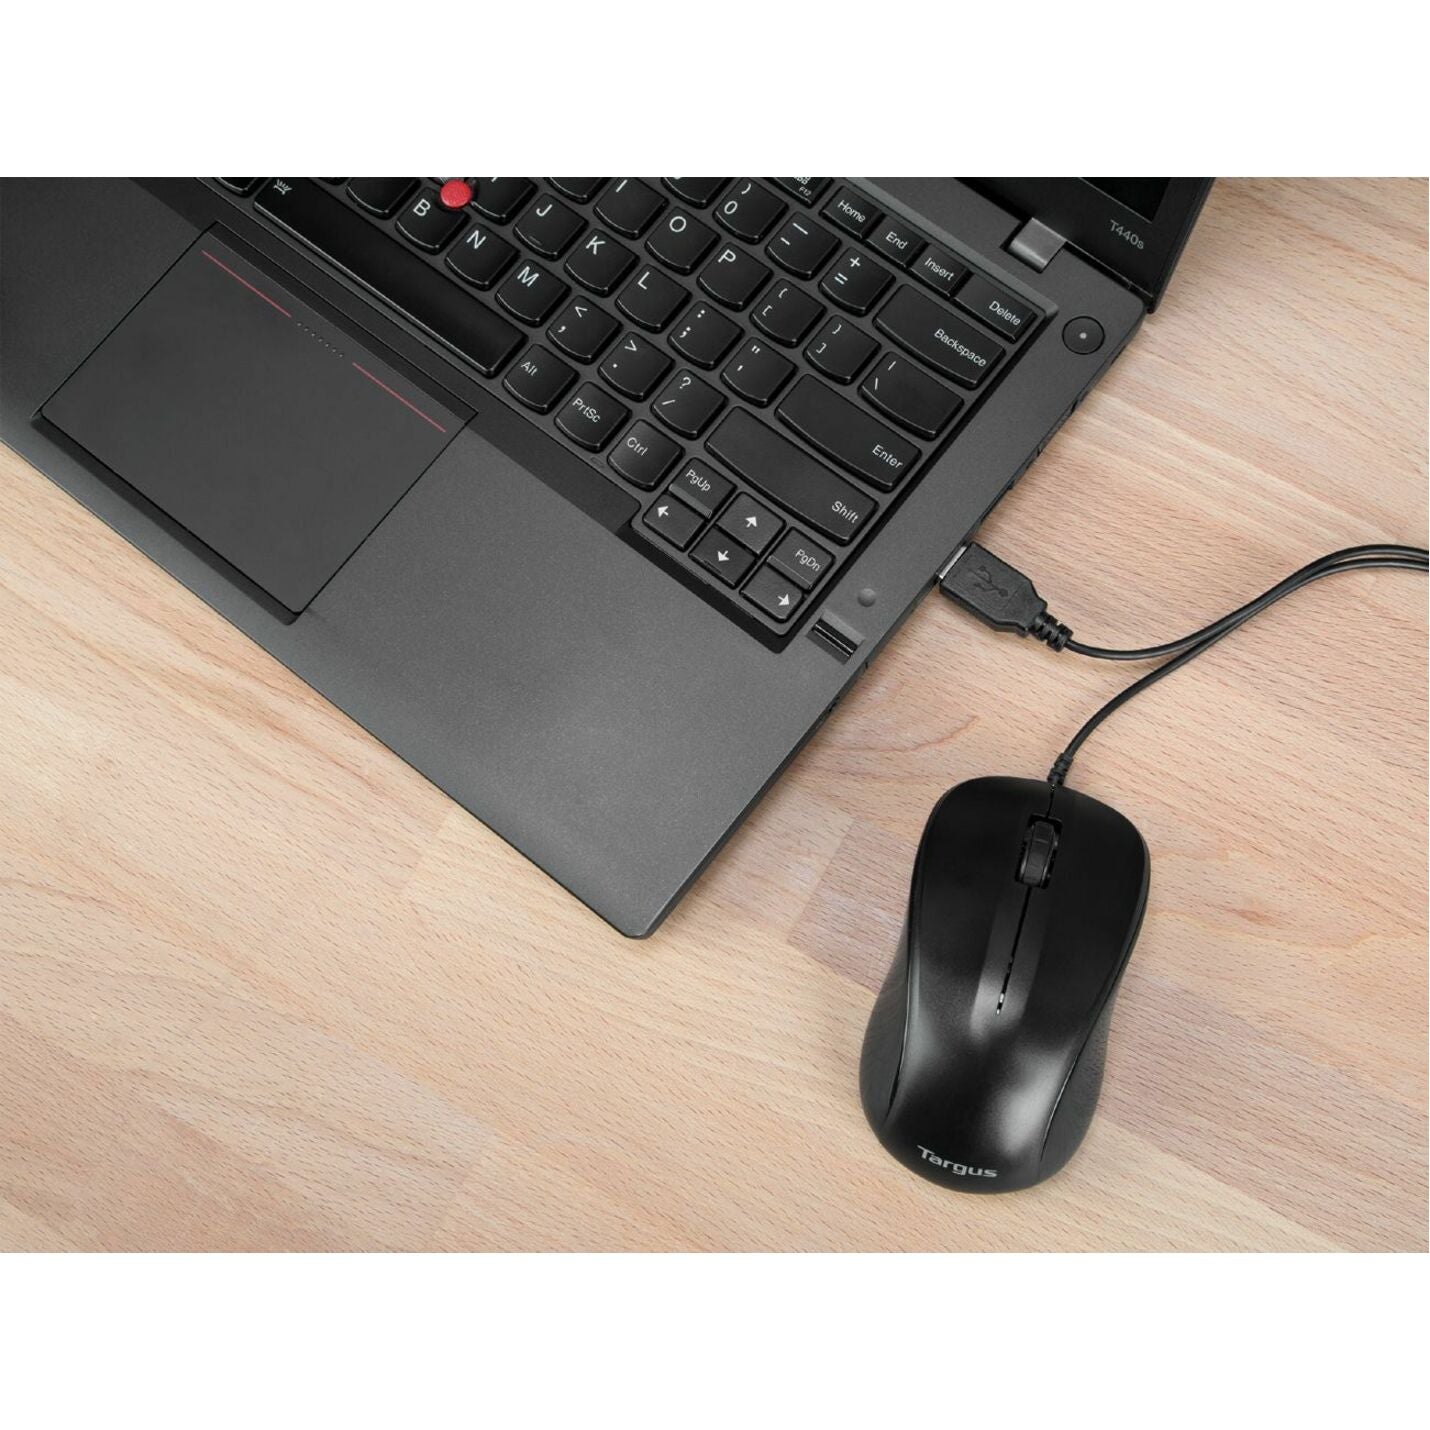 Targus AMU80US USB Optical Laptop Mouse, Ergonomic Fit, 1000 dpi, 3 Buttons, Black